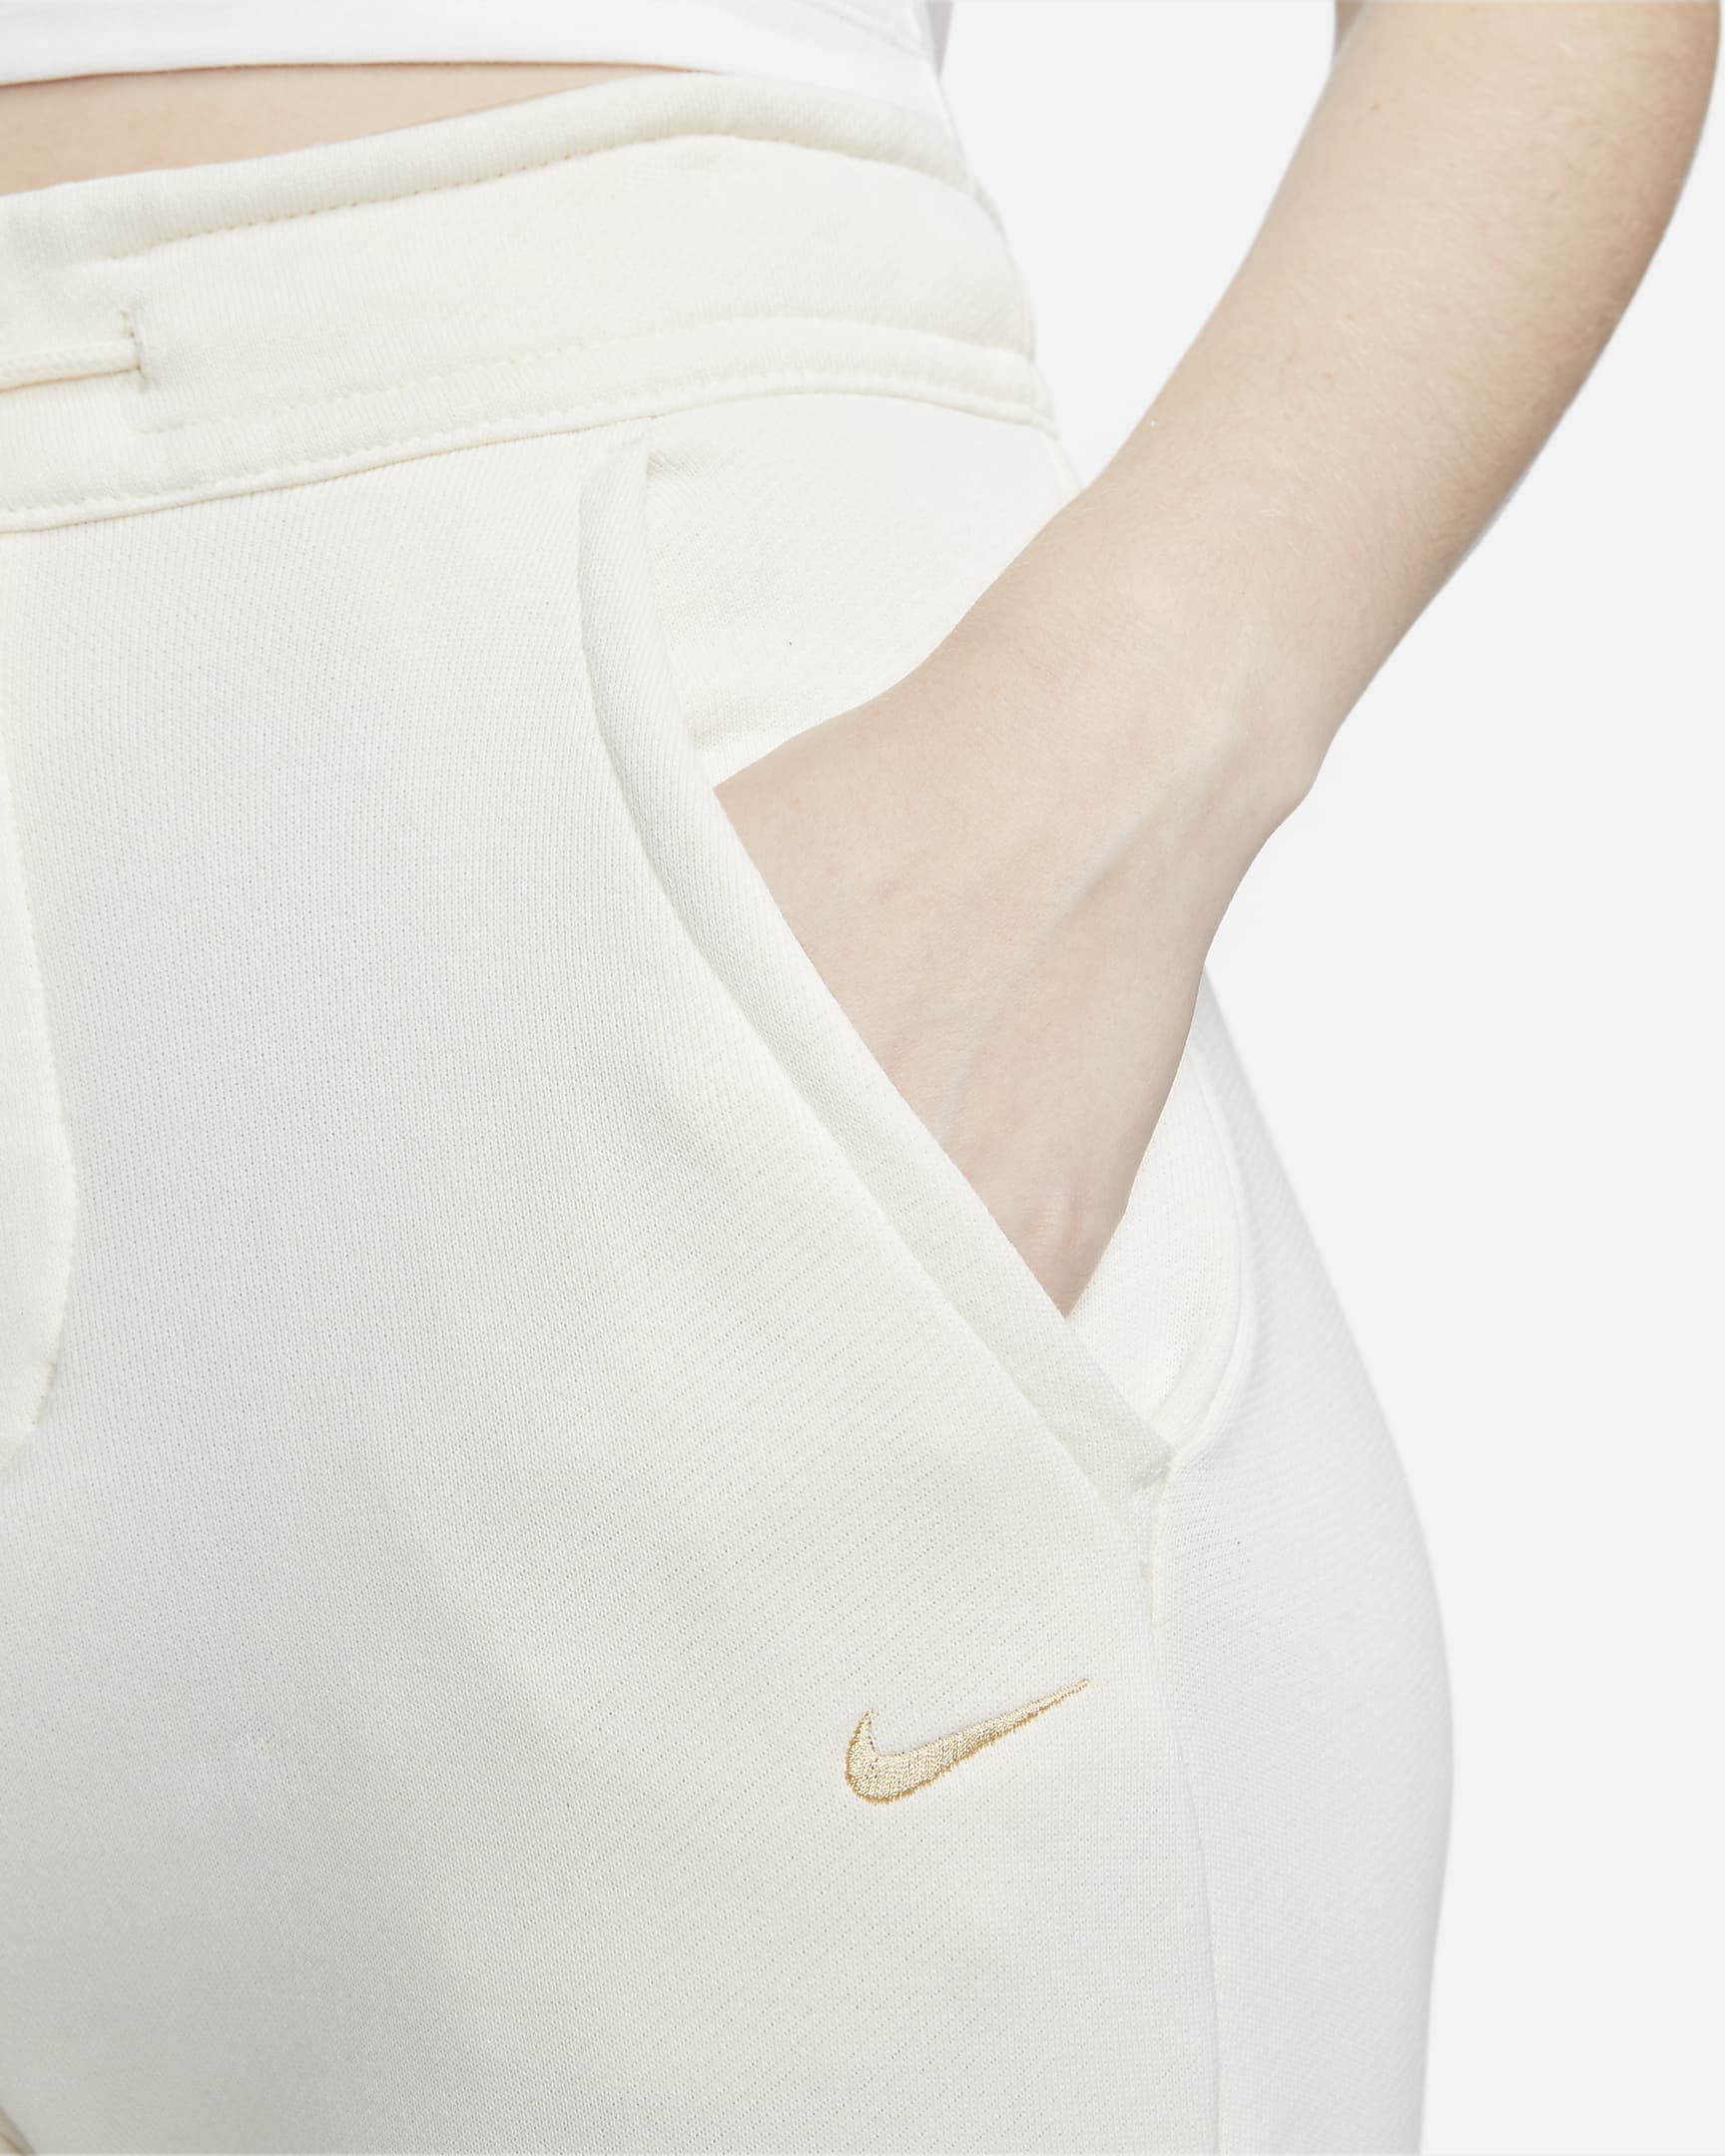 Nike Sportswear Modern Fleece Women's High-Waisted French Terry ...